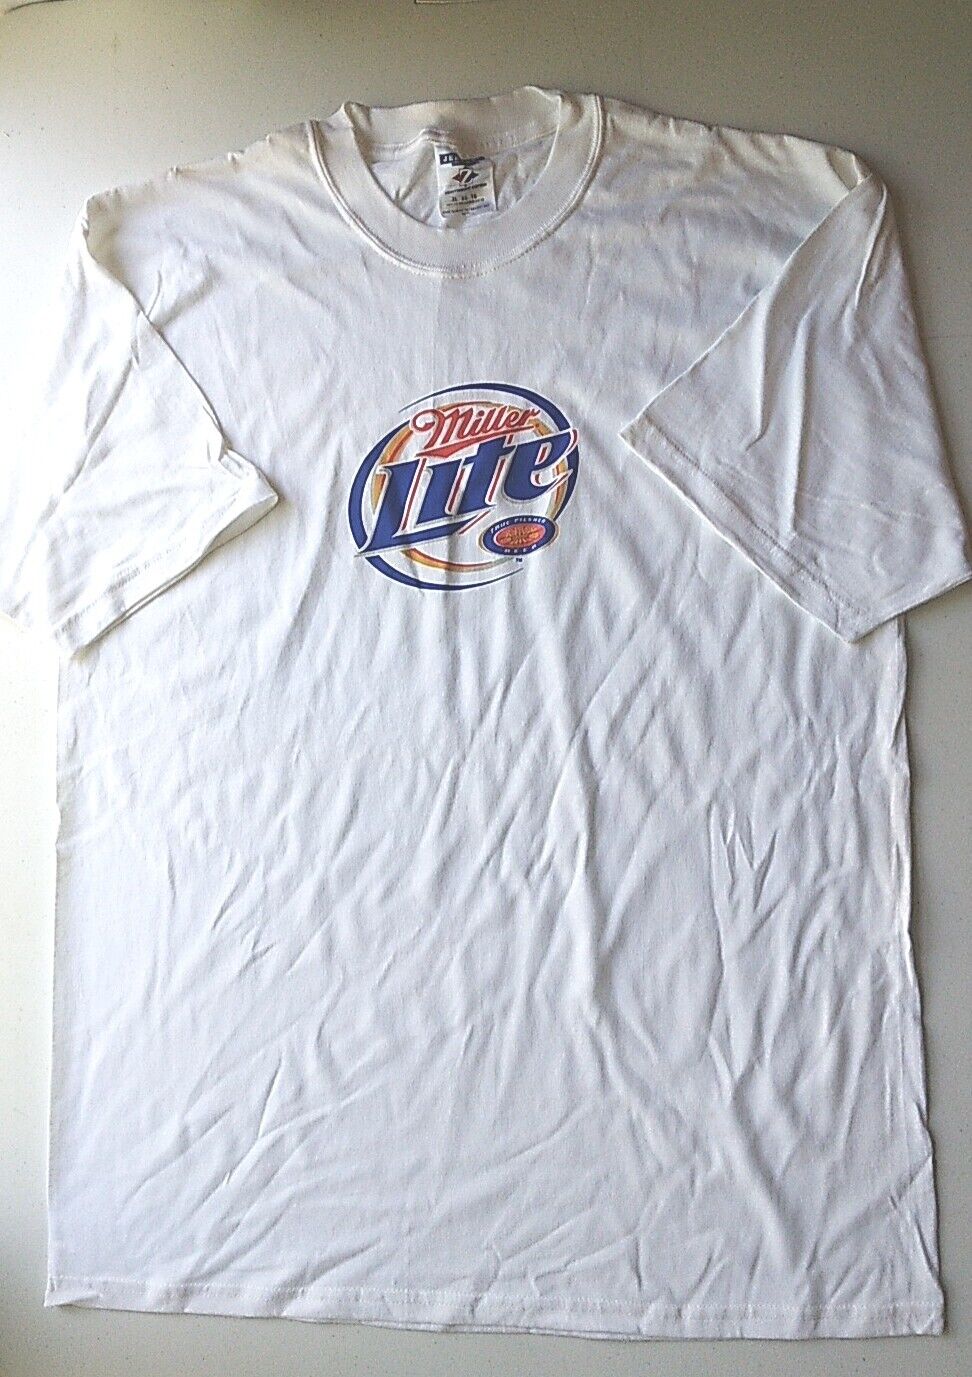 NOS Vintage Jerzees Miller Lite T-Shirt Size XL